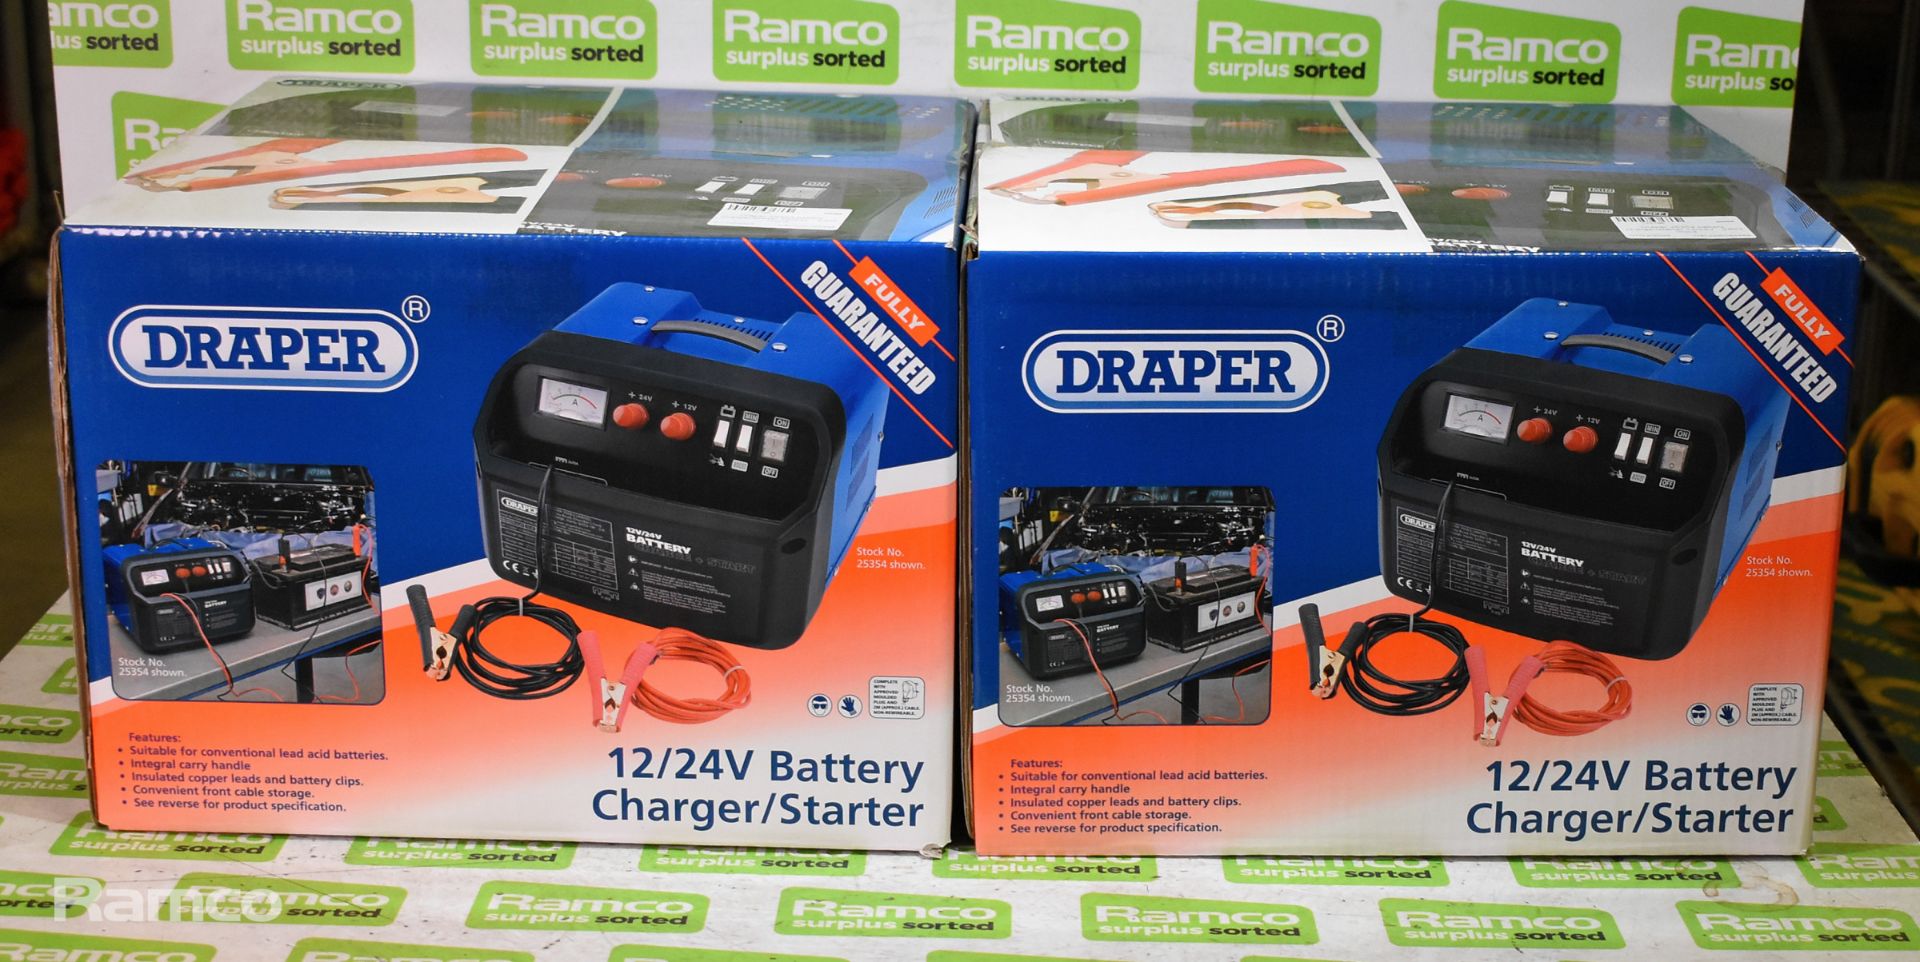 2x Draper 25354 battery charger / starters 12 / 24V - 240V input - Image 2 of 2